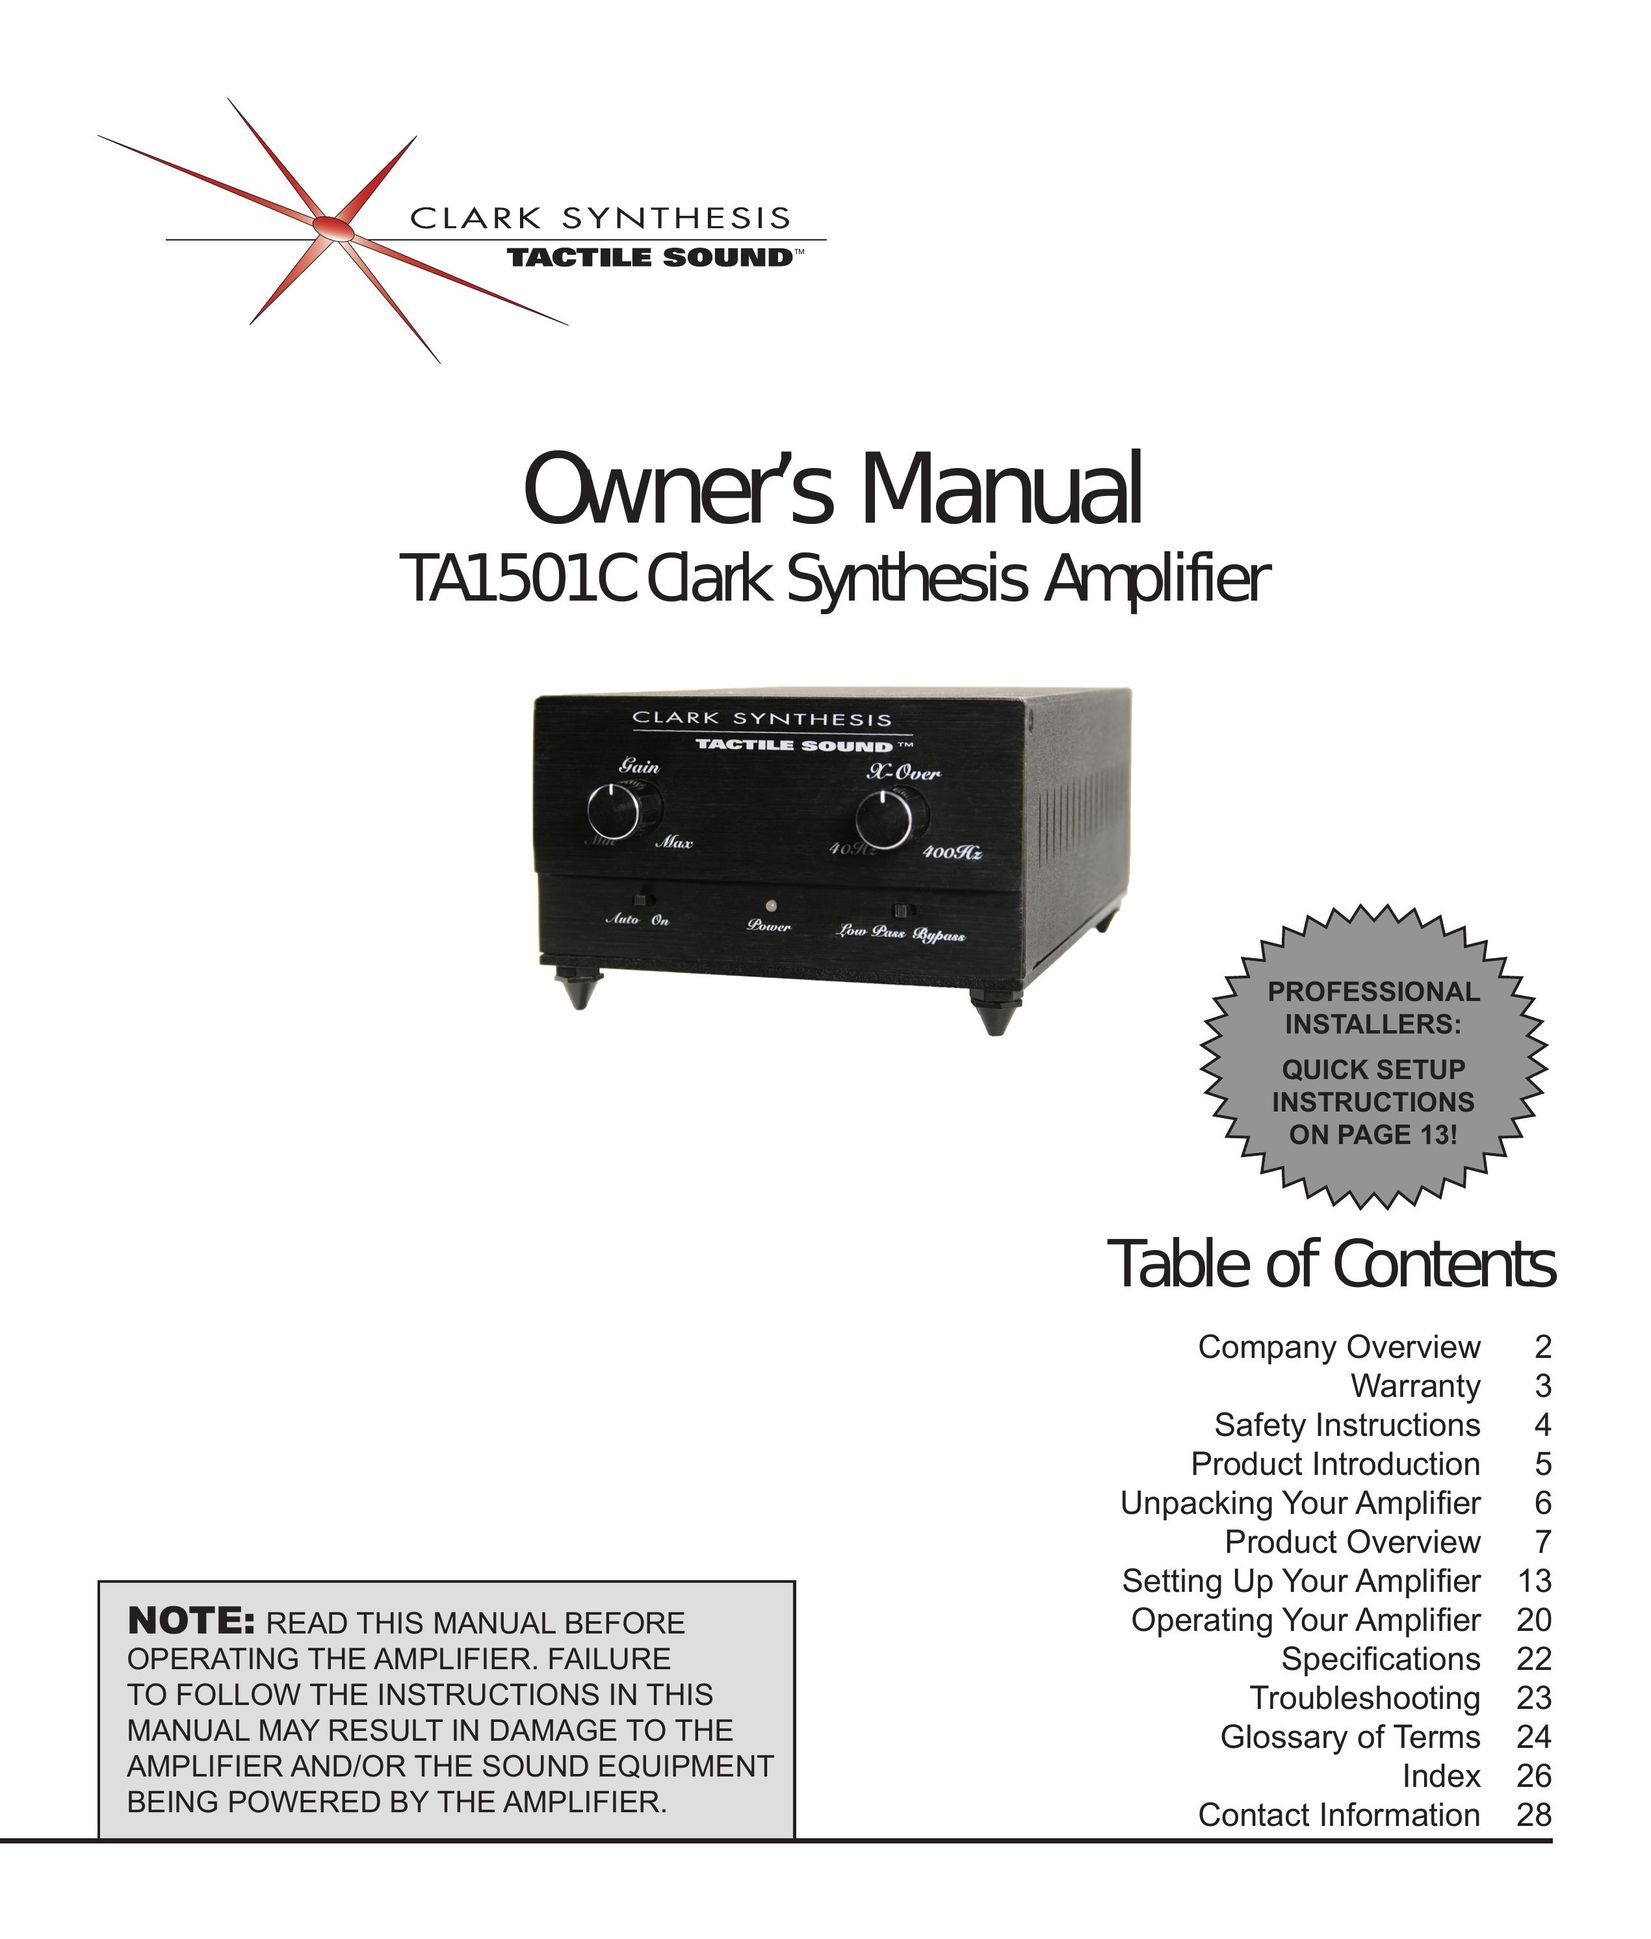 Clark Synthesis TA1501C Car Amplifier User Manual